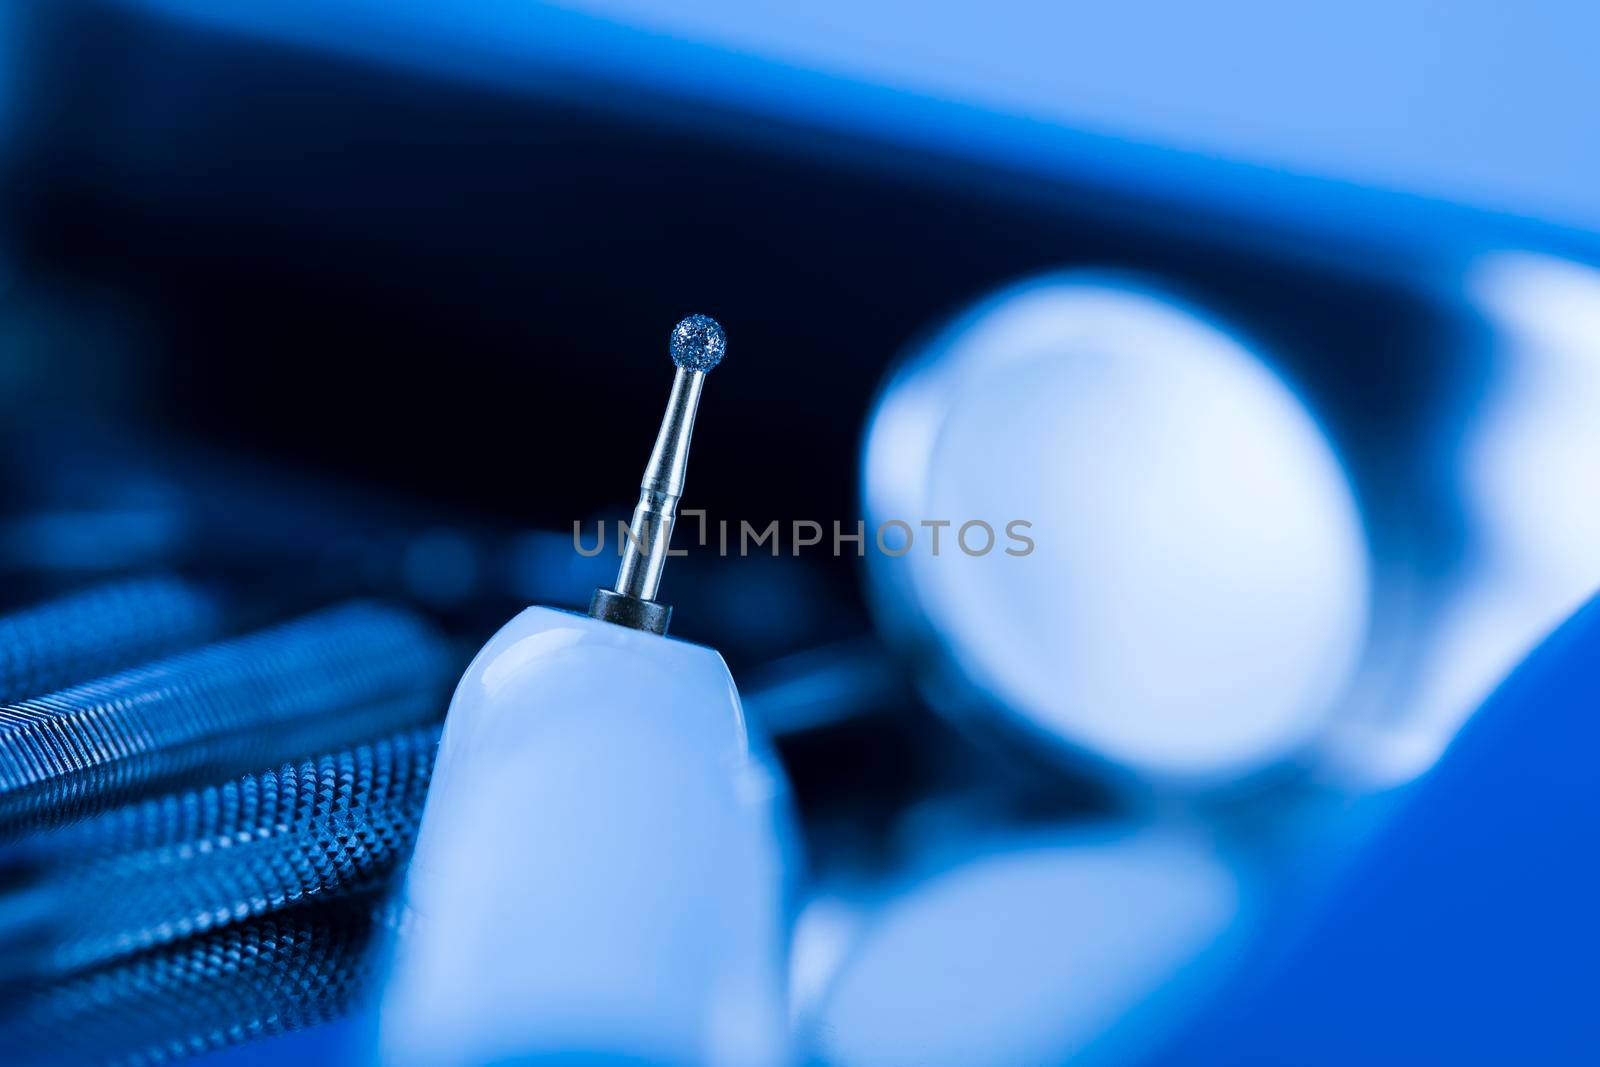 Stomatology equipment for dental care by JanPietruszka